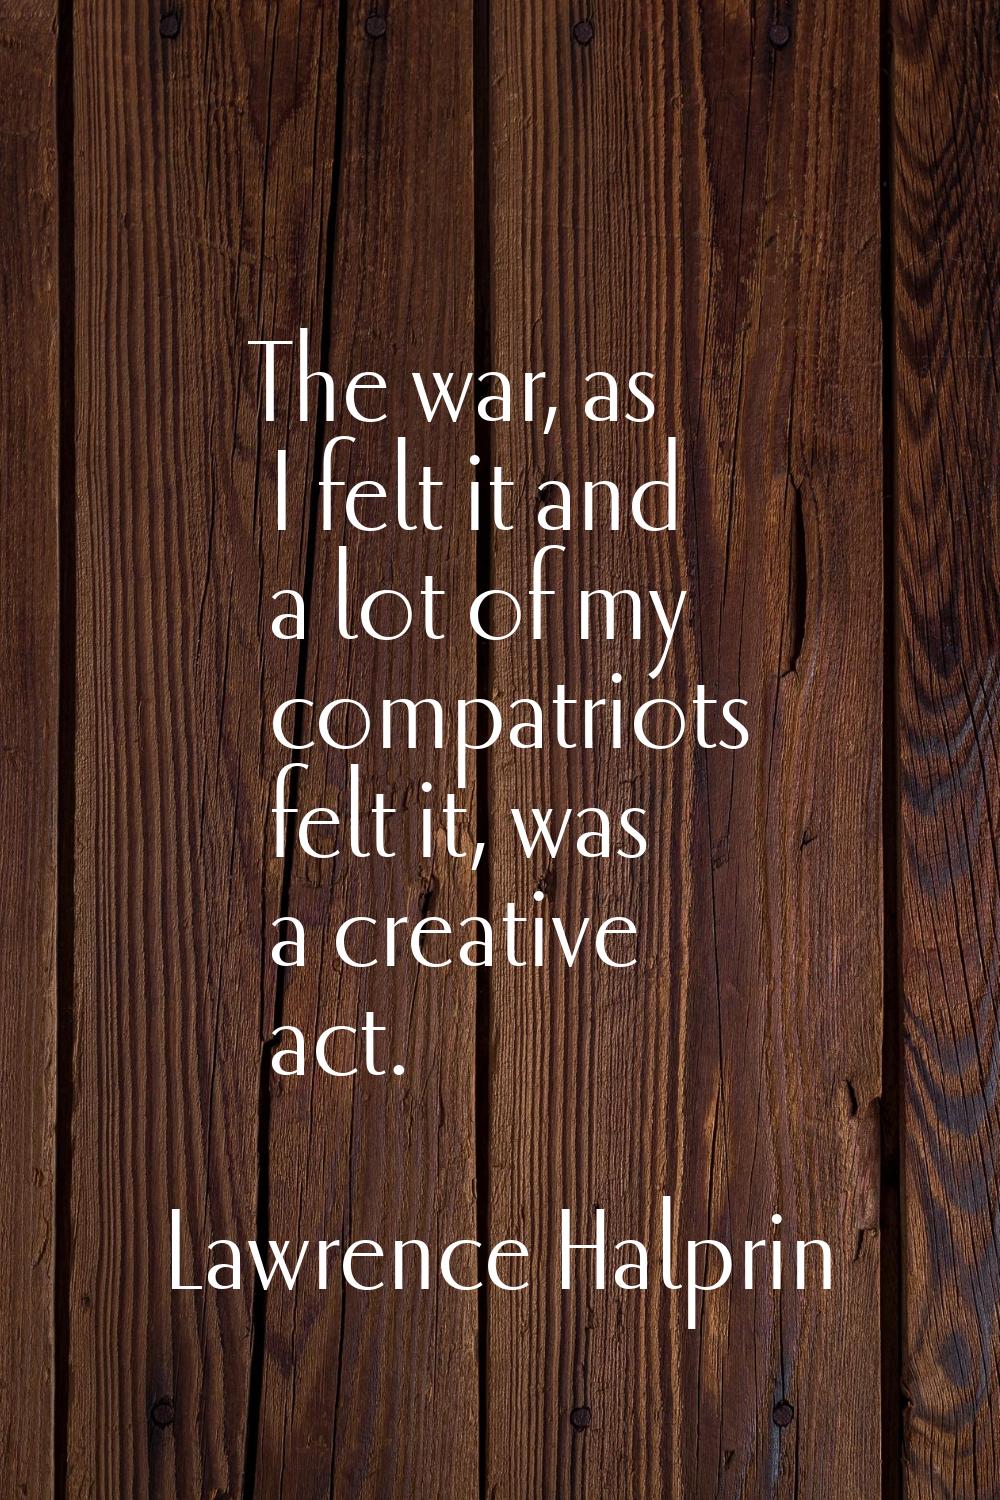 The war, as I felt it and a lot of my compatriots felt it, was a creative act.